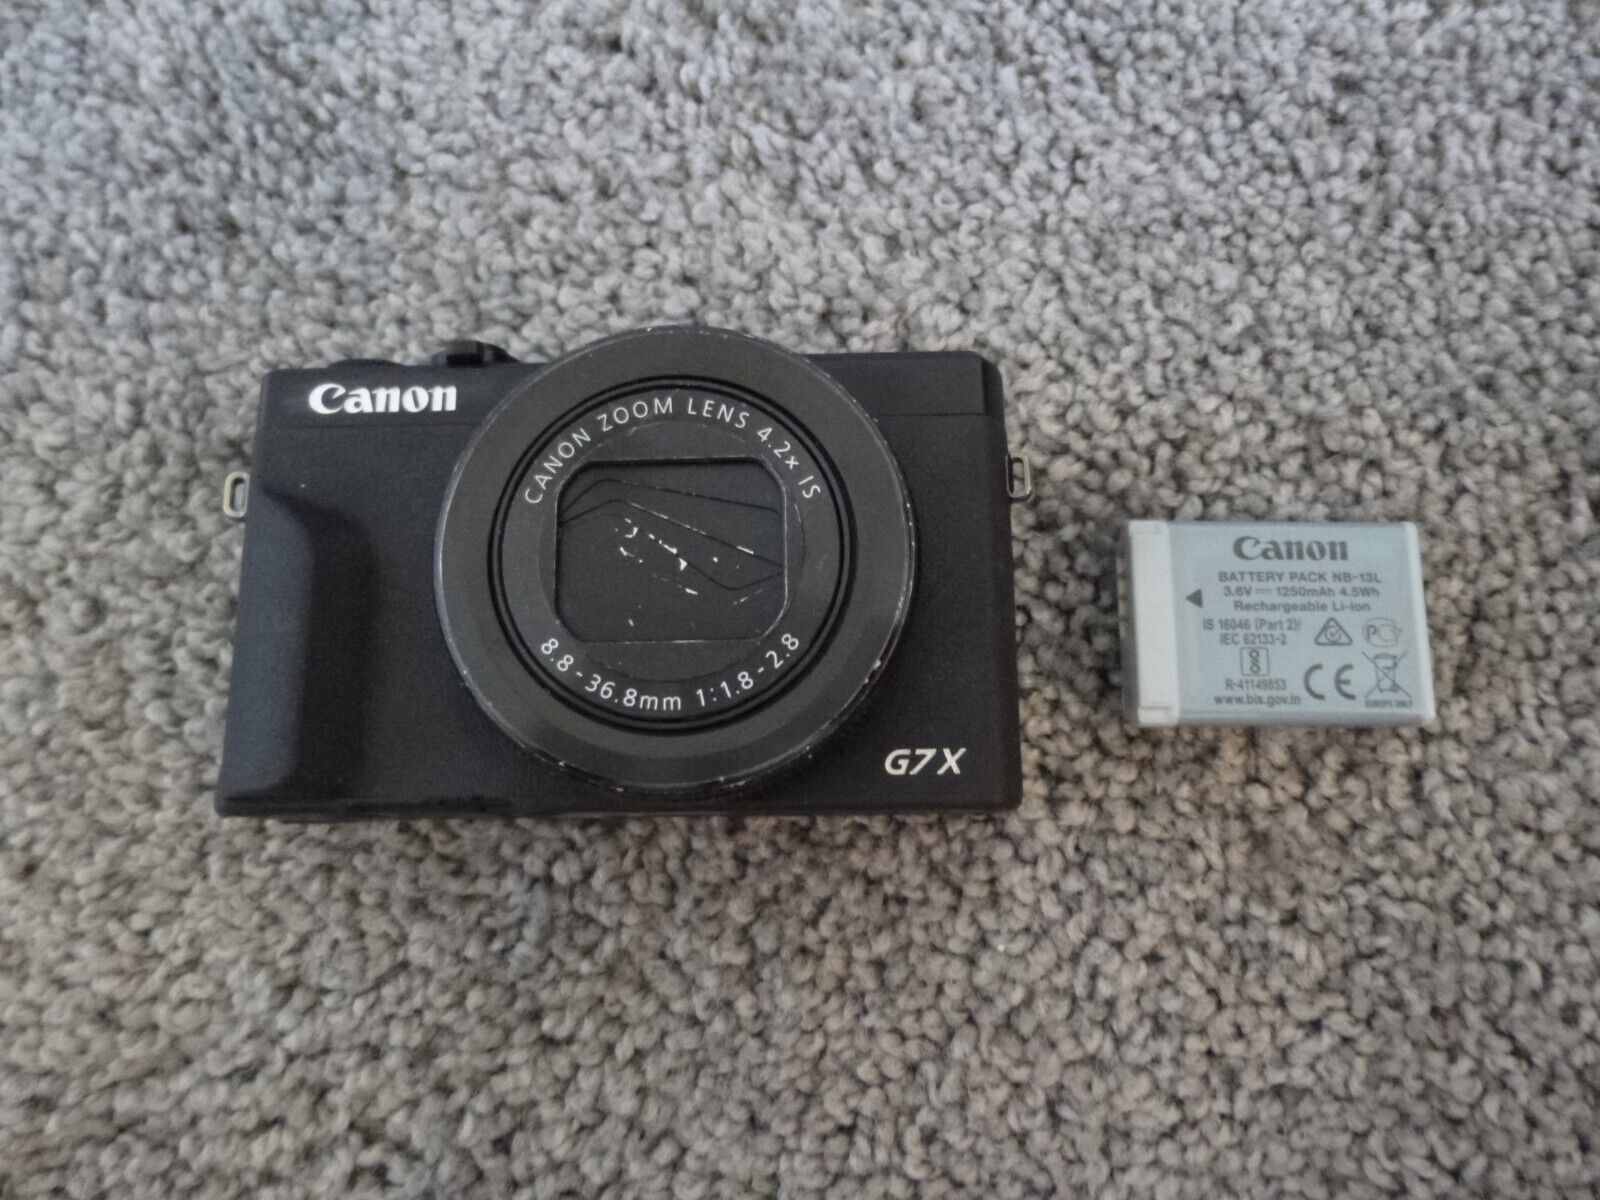 *Canon PowerShot G7 X Mark III - 20.1MP Point & Shoot Digital Camera (Black)*